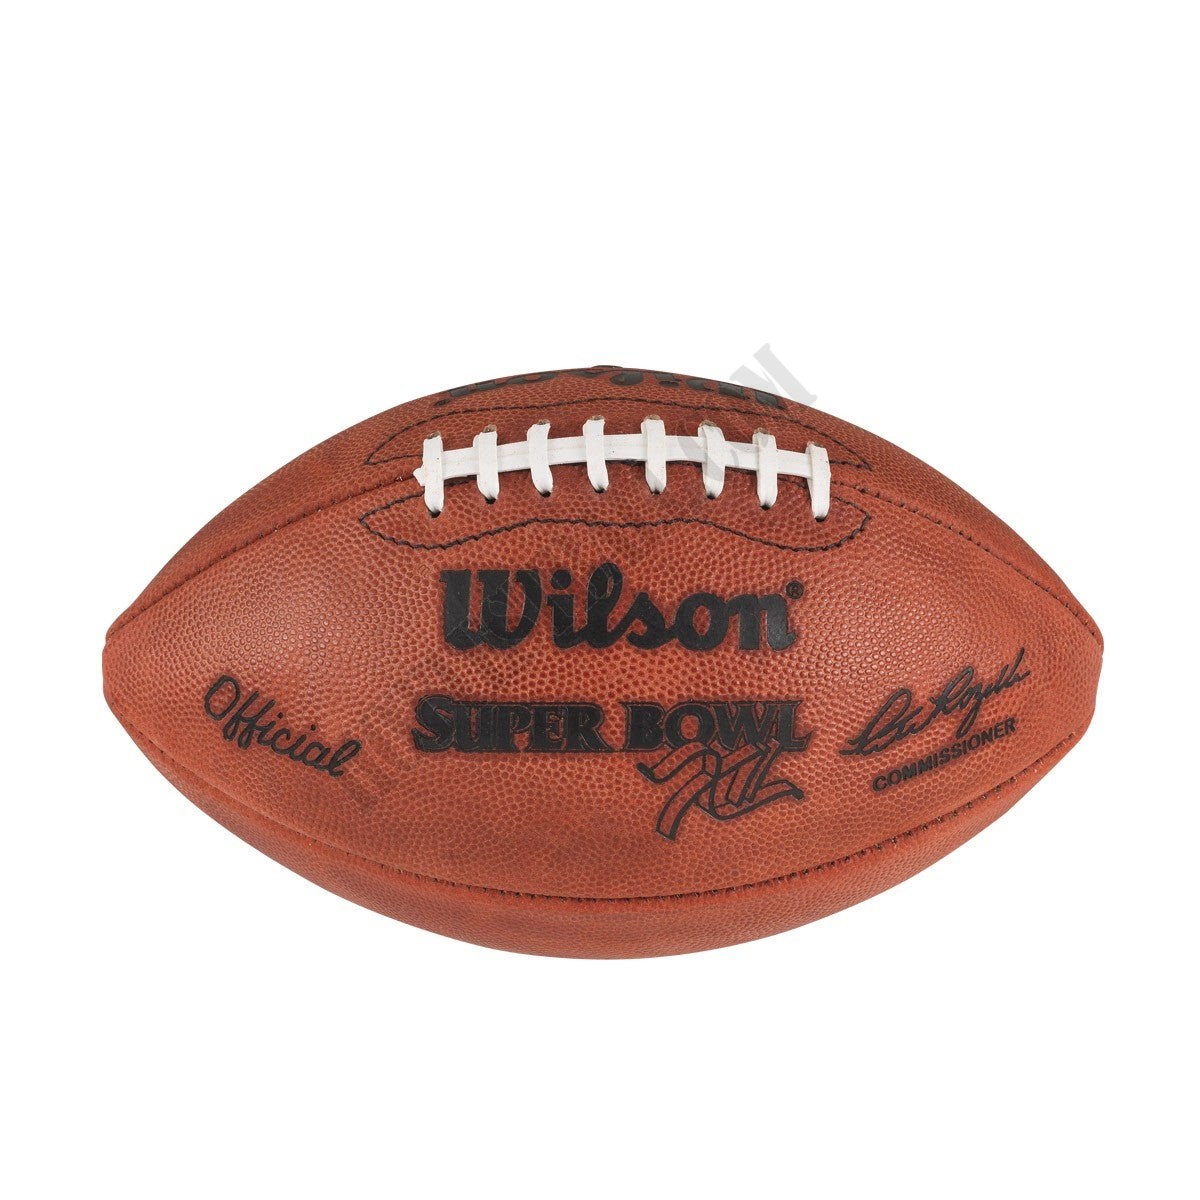 Super Bowl XII Game Football - Dallas Cowboys ● Wilson Promotions - Super Bowl XII Game Football - Dallas Cowboys ● Wilson Promotions